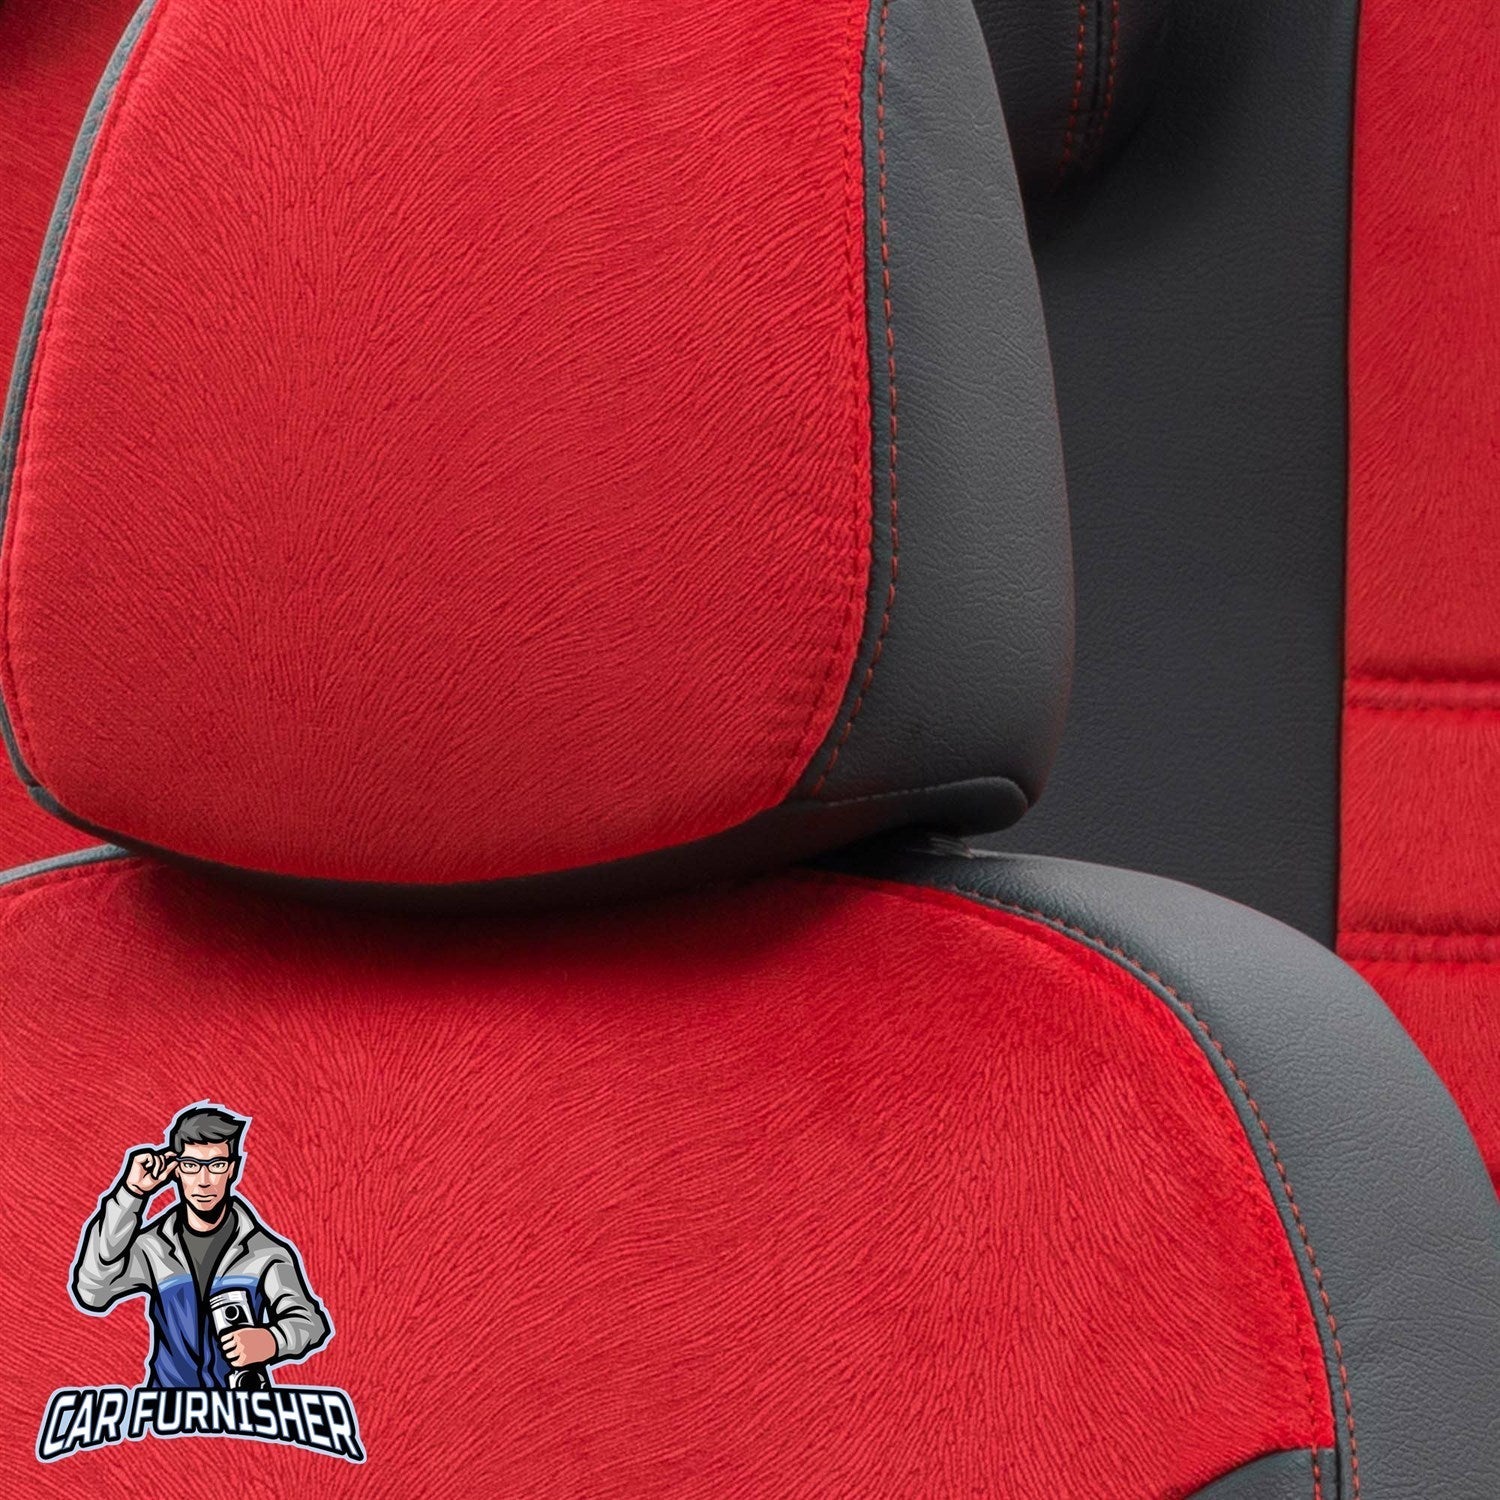 Bmw X5 Car Seat Cover 2000-2006 E53 Custom London Design Red Full Set (5 Seats + Handrest) Leather & Fabric